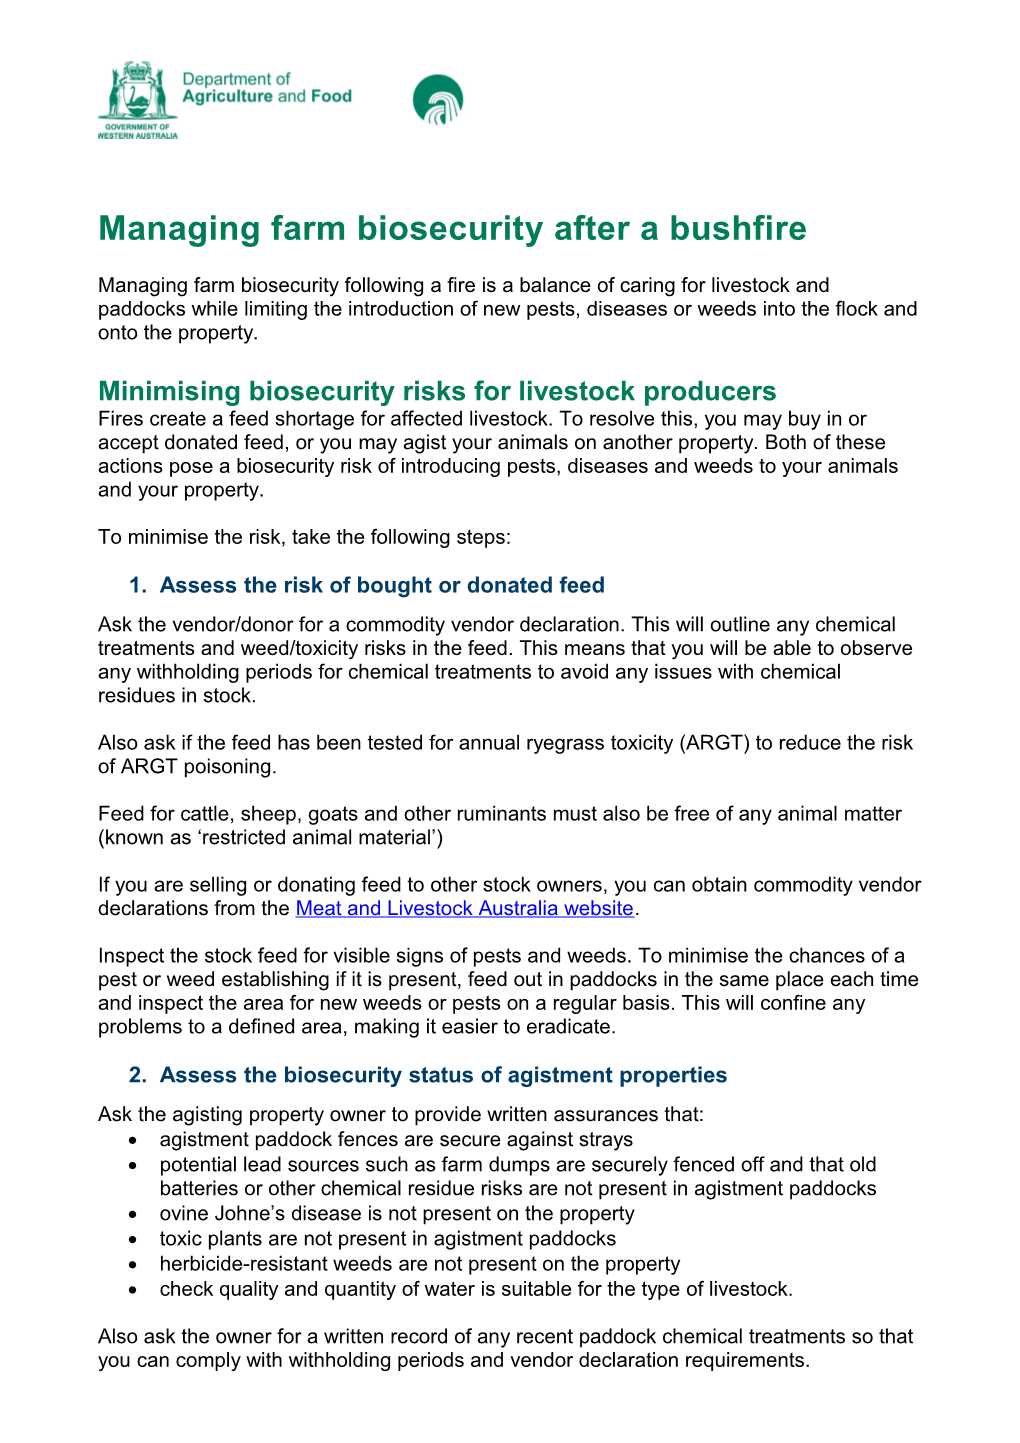 Managing Farm Biosecurityafter a Bushfire